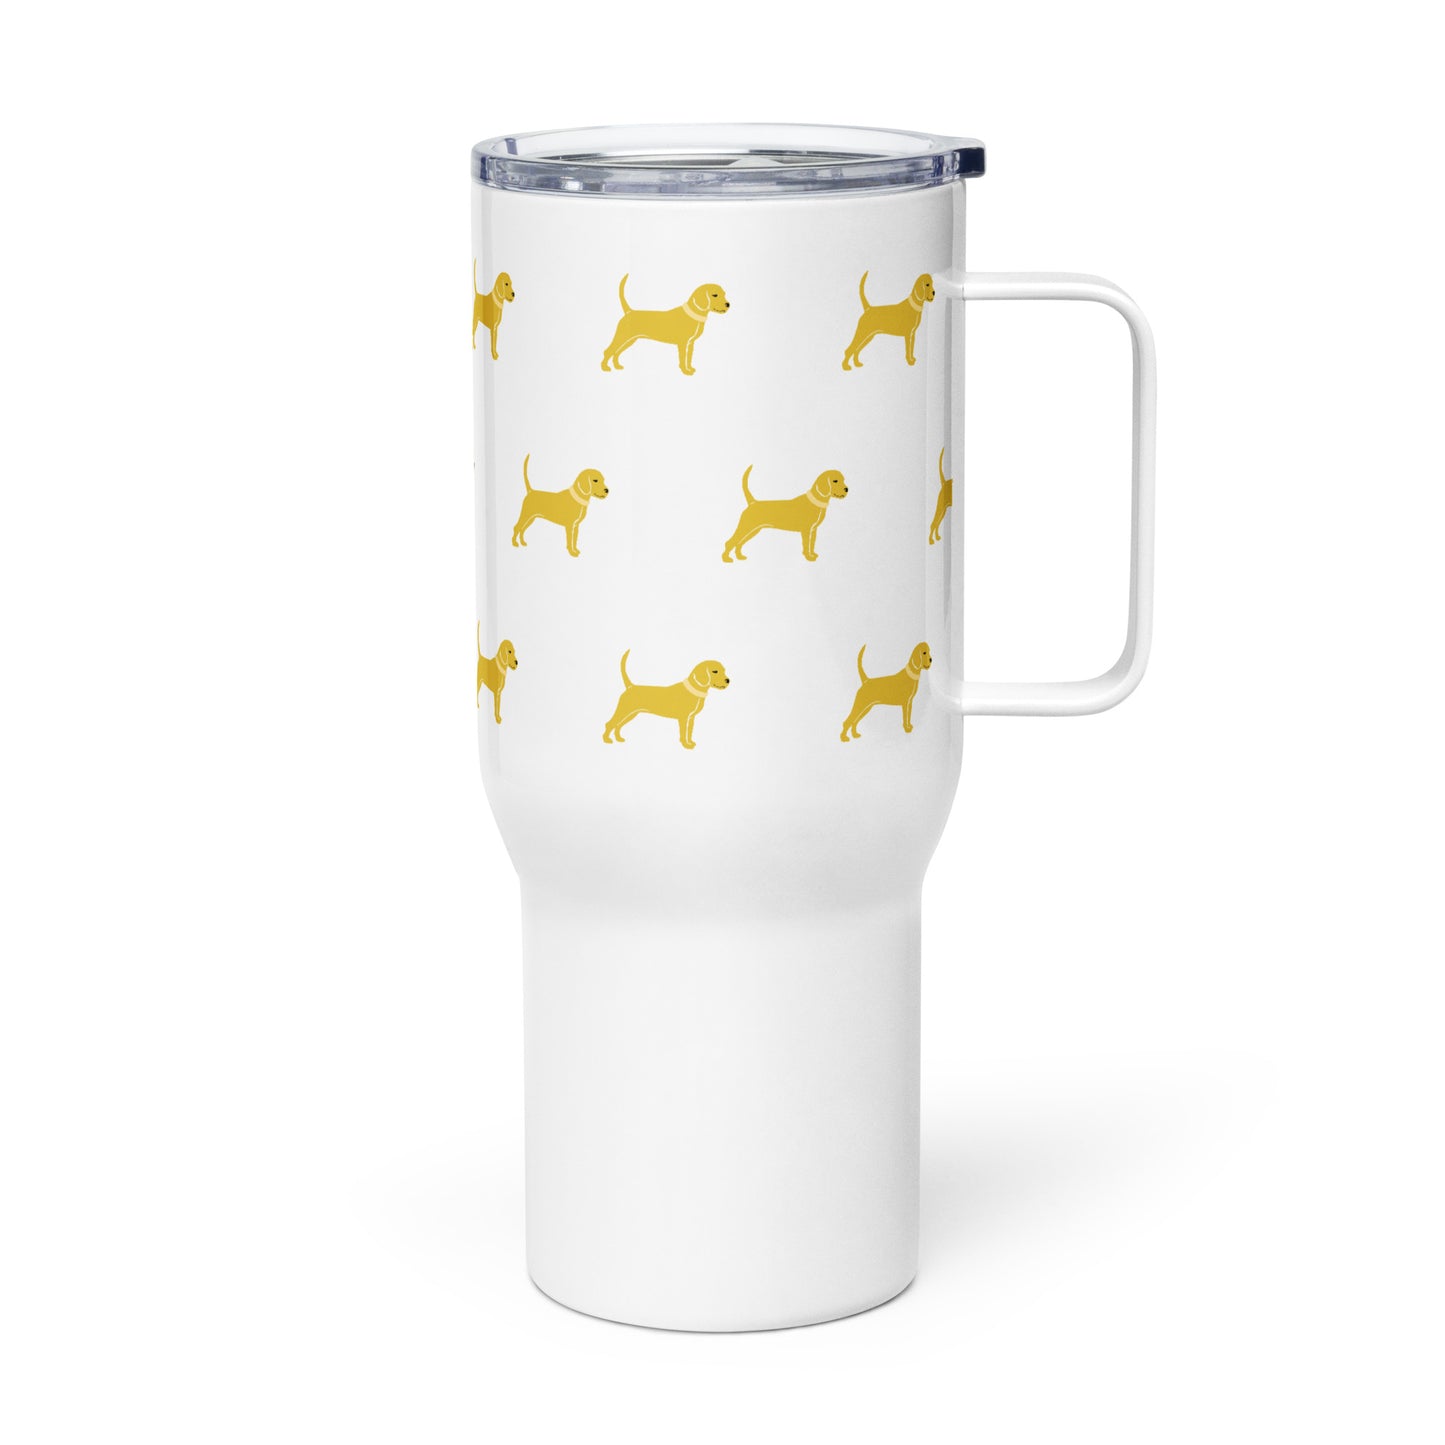 LIttle Yellow Dog Travel mug with a handle